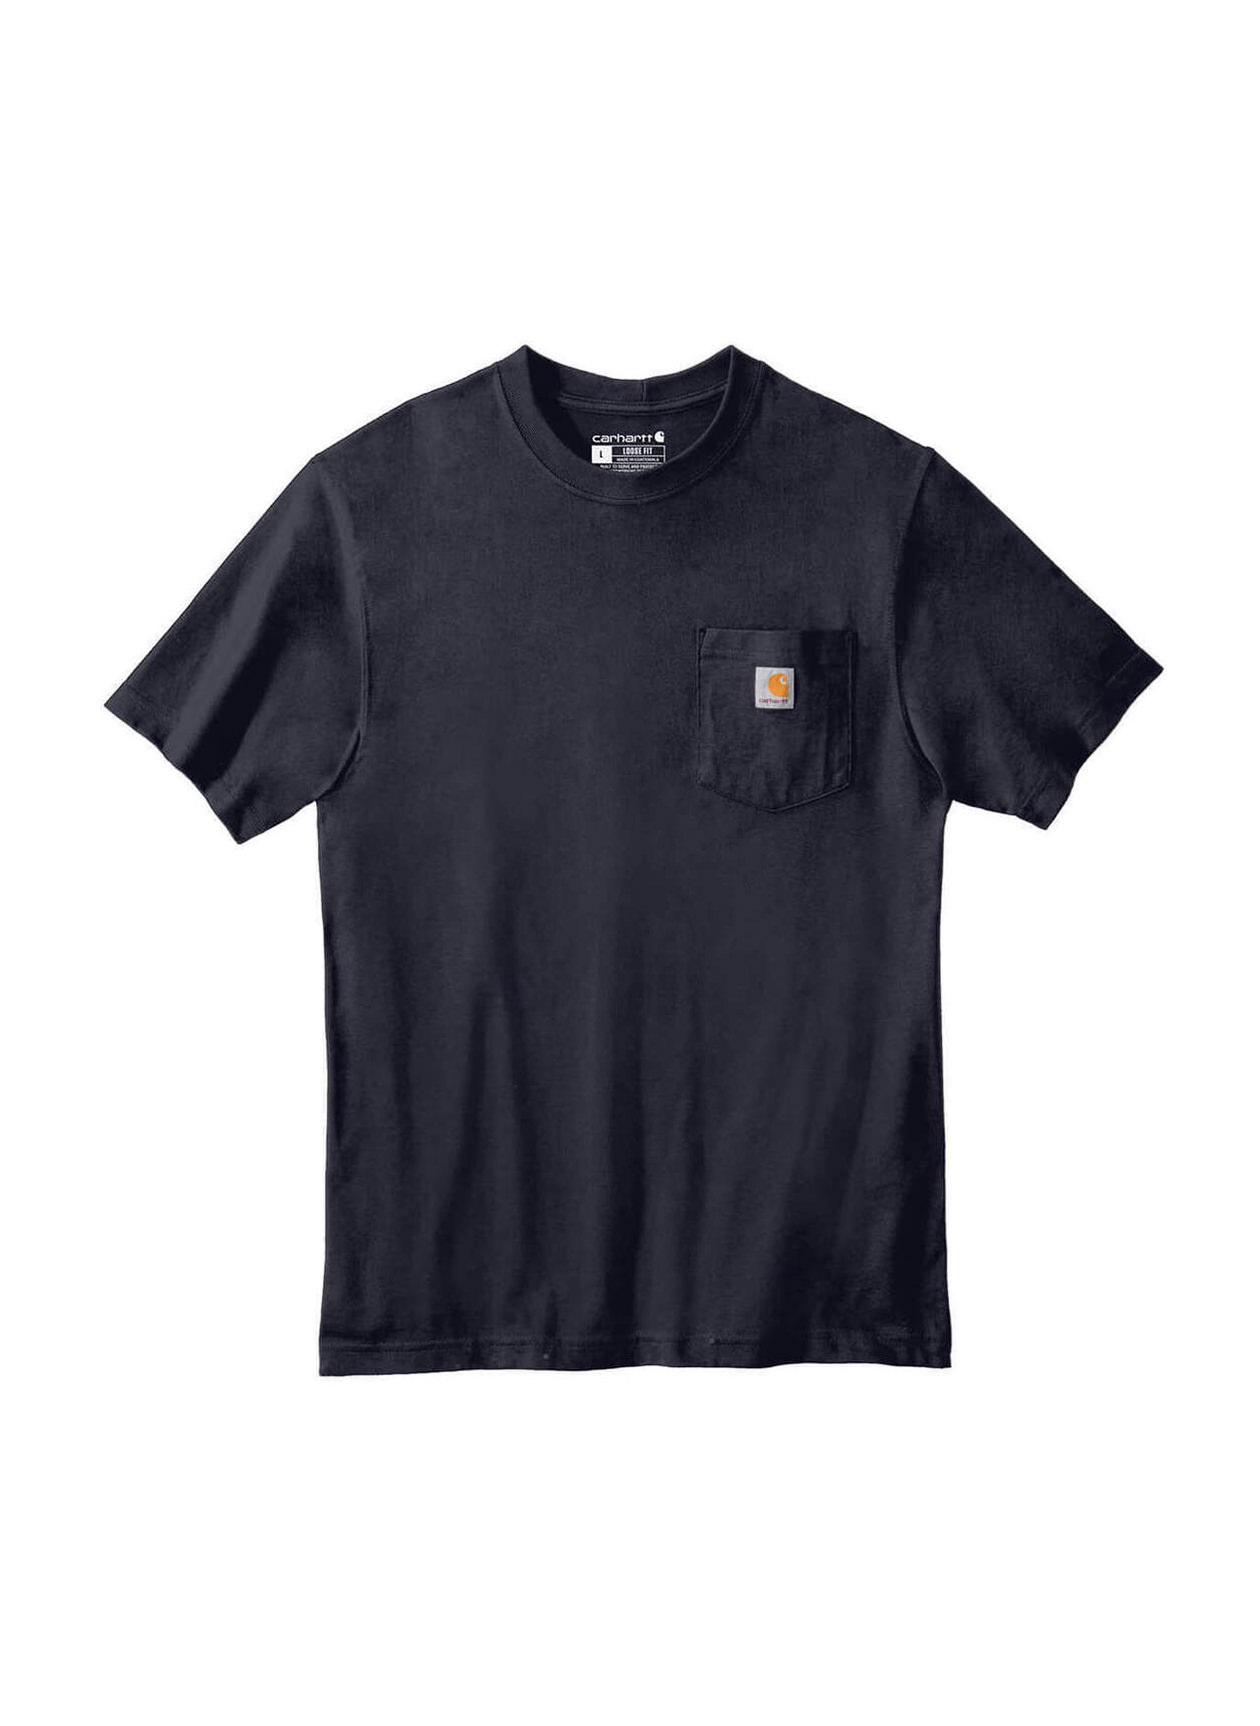 Carhartt Men's Navy Workwear Pocket T-Shirt